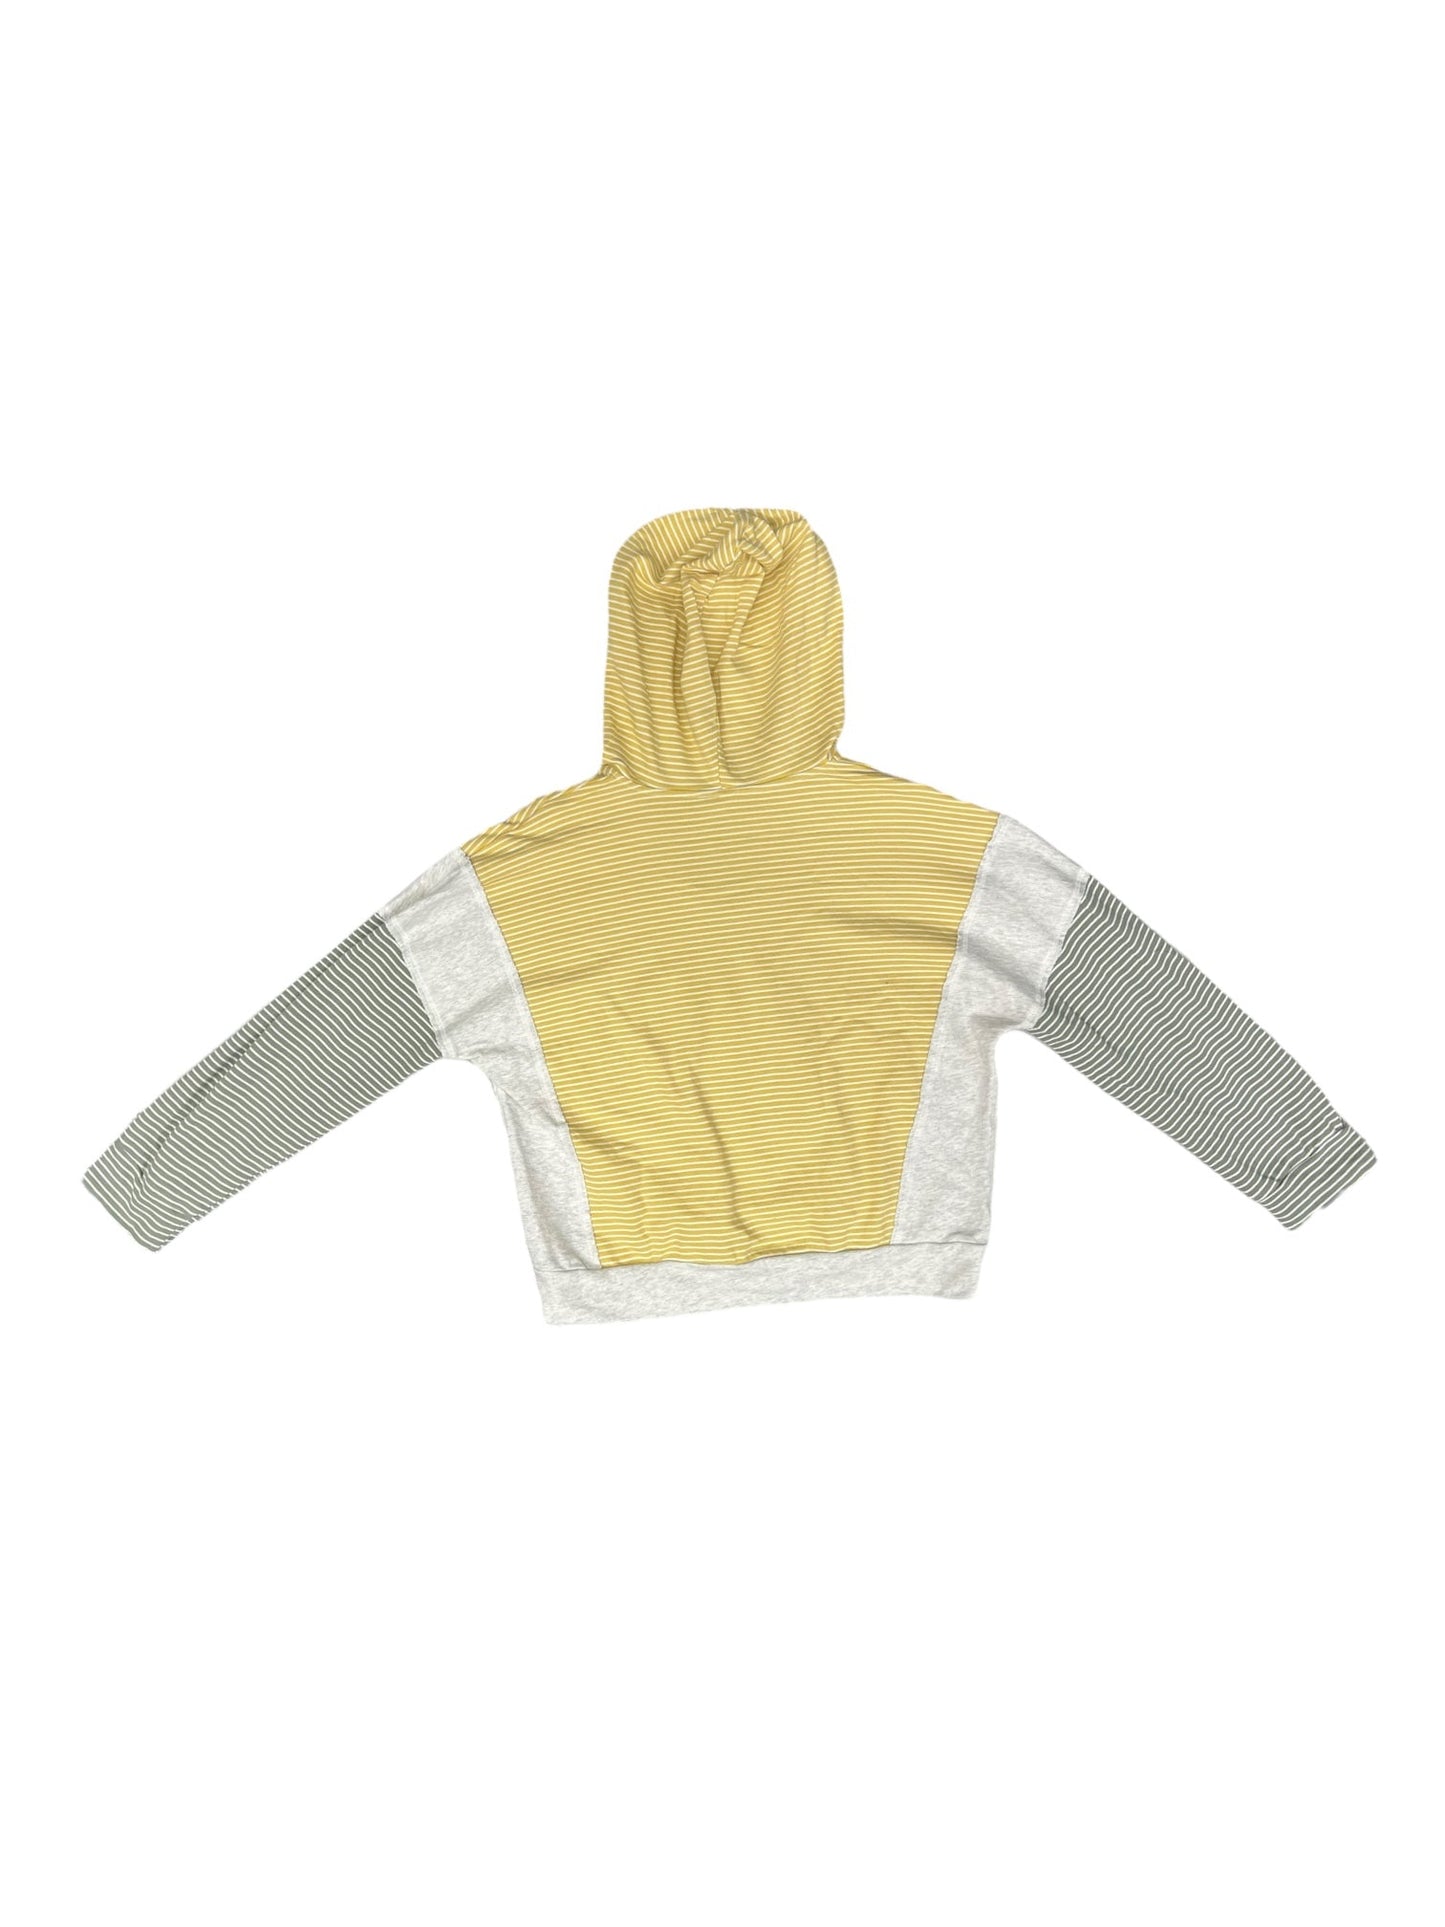 Sweatshirt Hoodie By Hem & Thread  Size: M